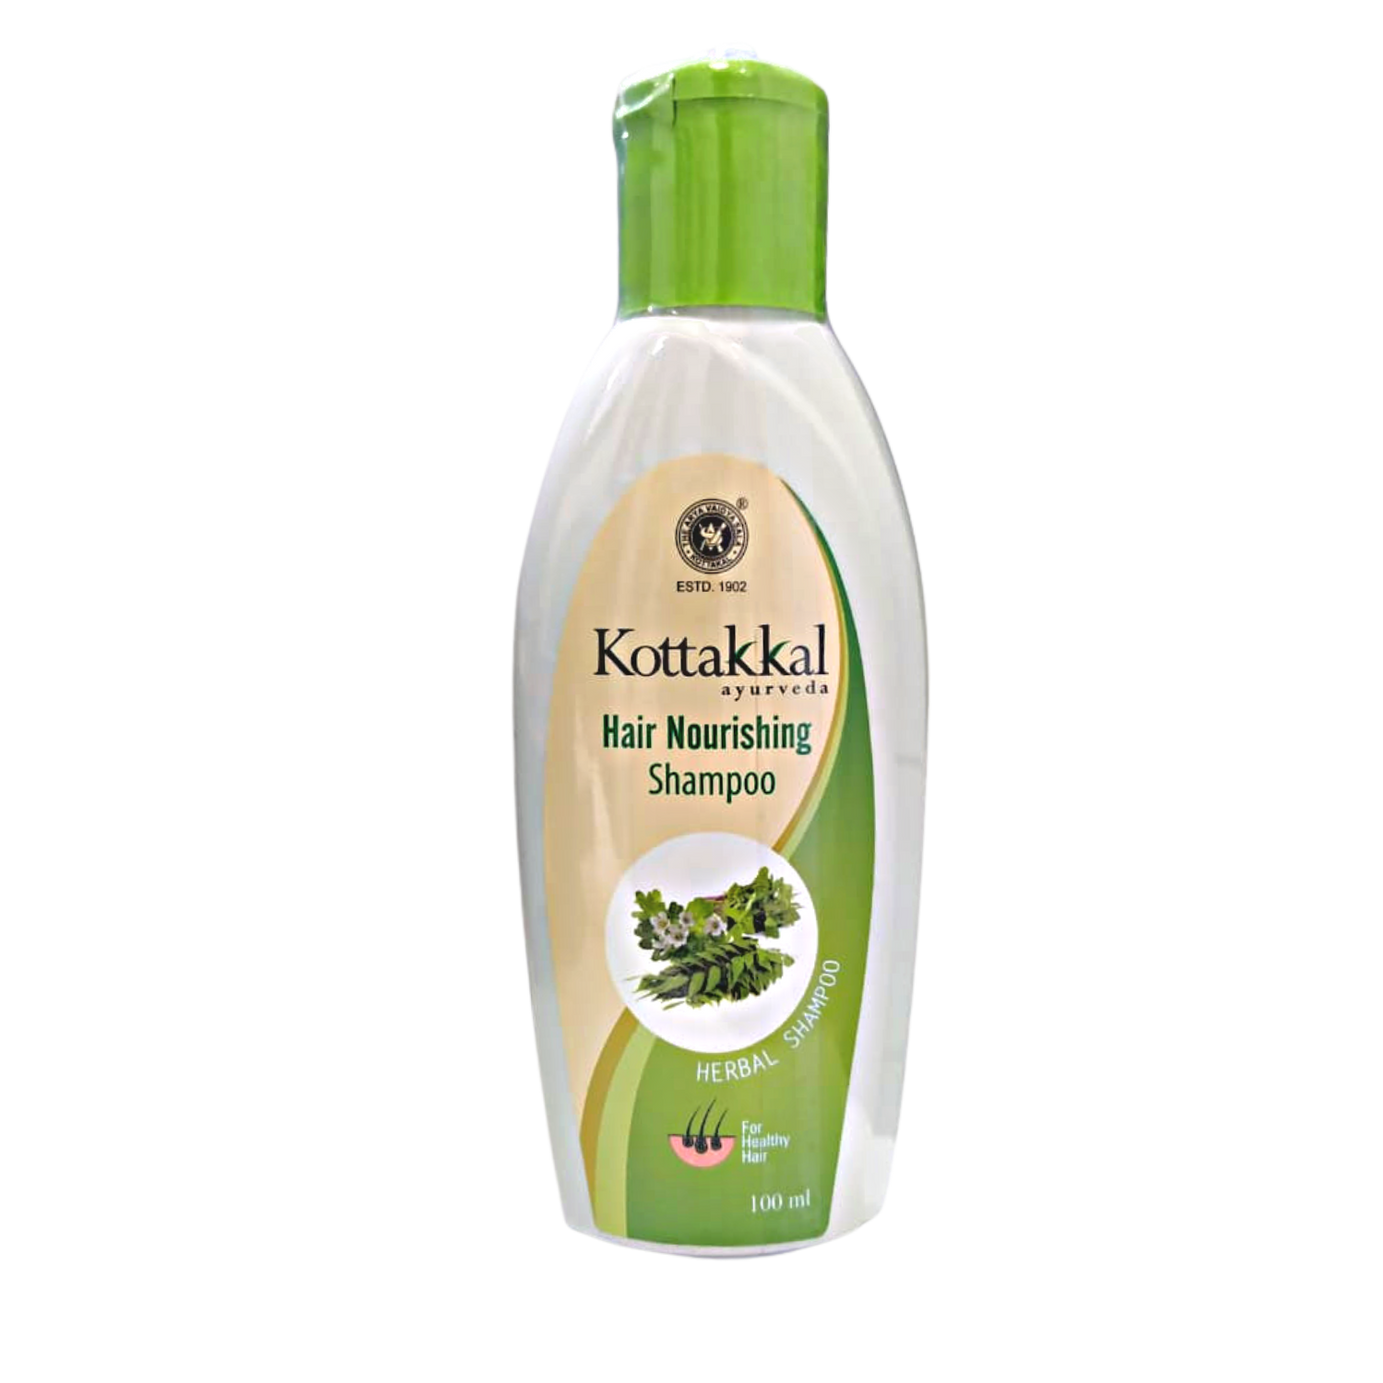 Kottakkal Hair Nourishing Shampoo 100ml